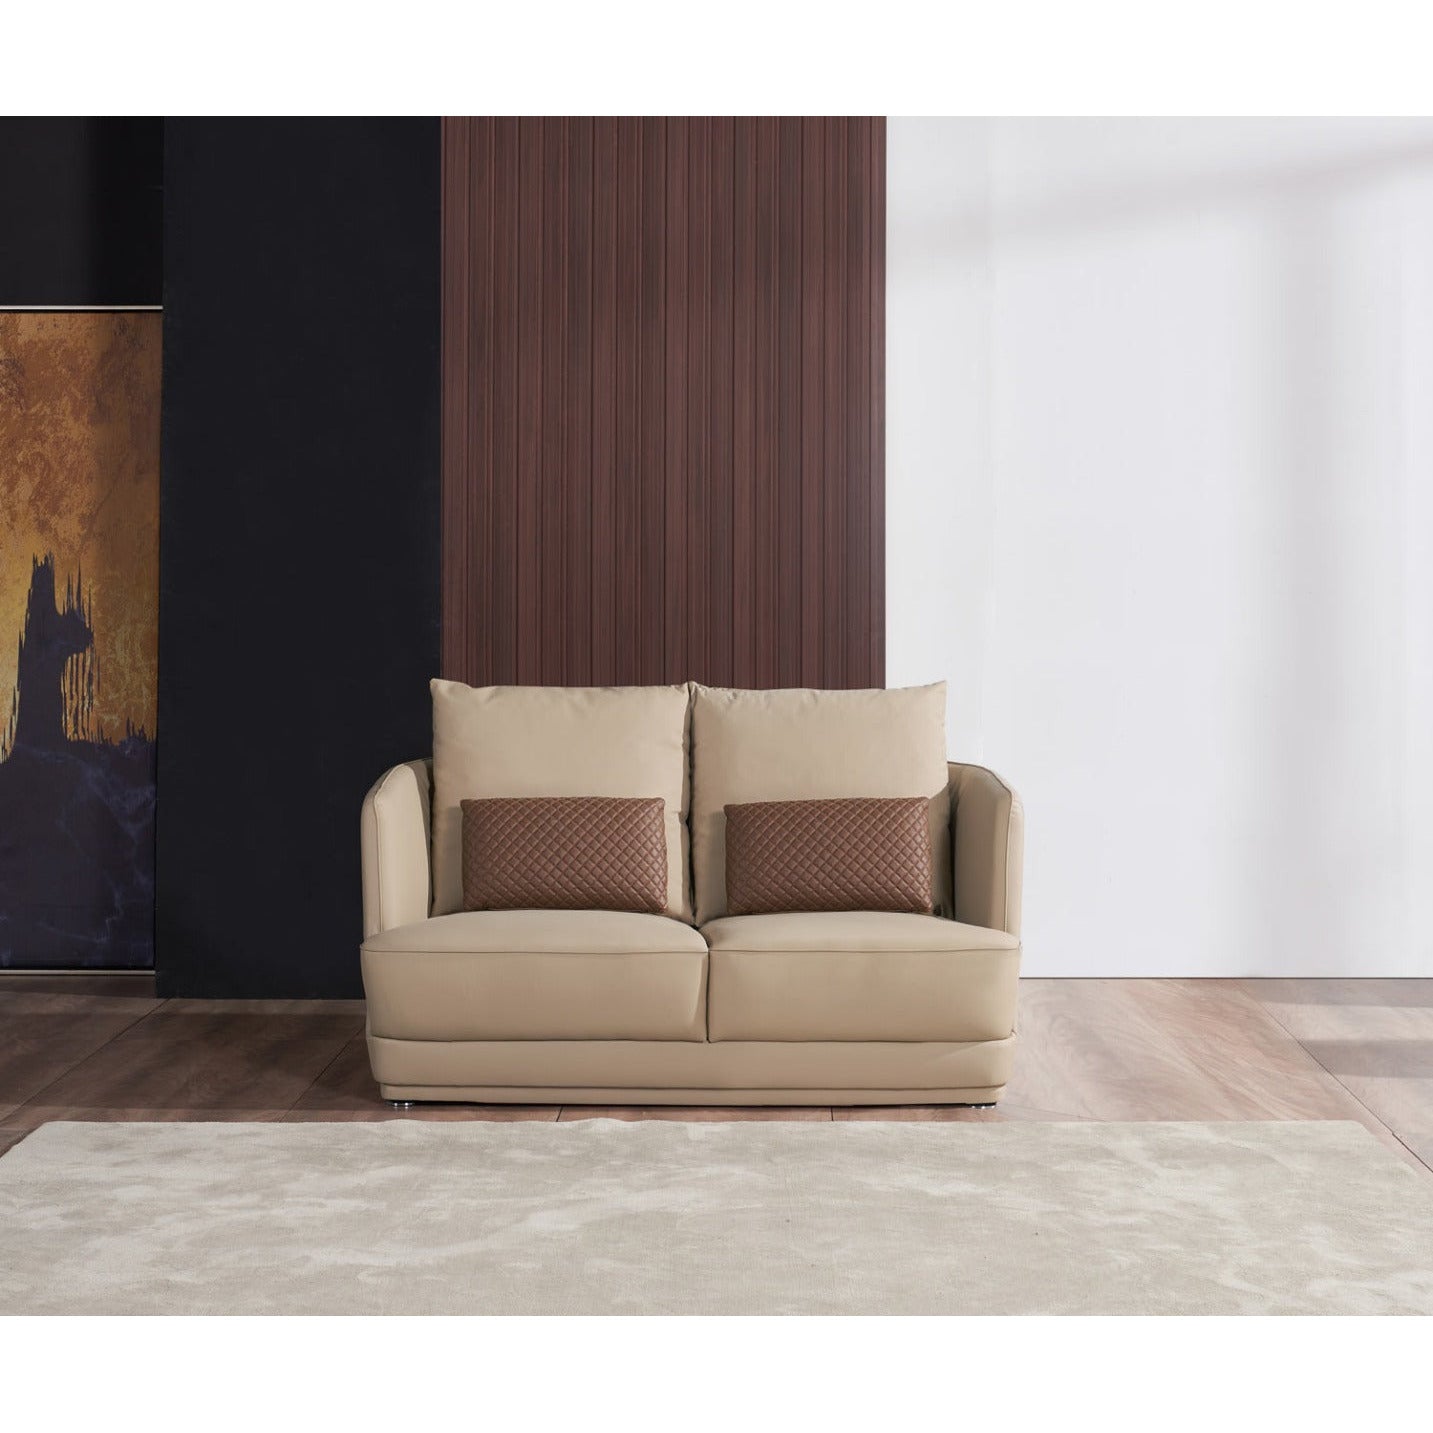 European Furniture - Glamour 2 Piece Living Room Set in Tan-Brown - 51617-2SET - New Star Living